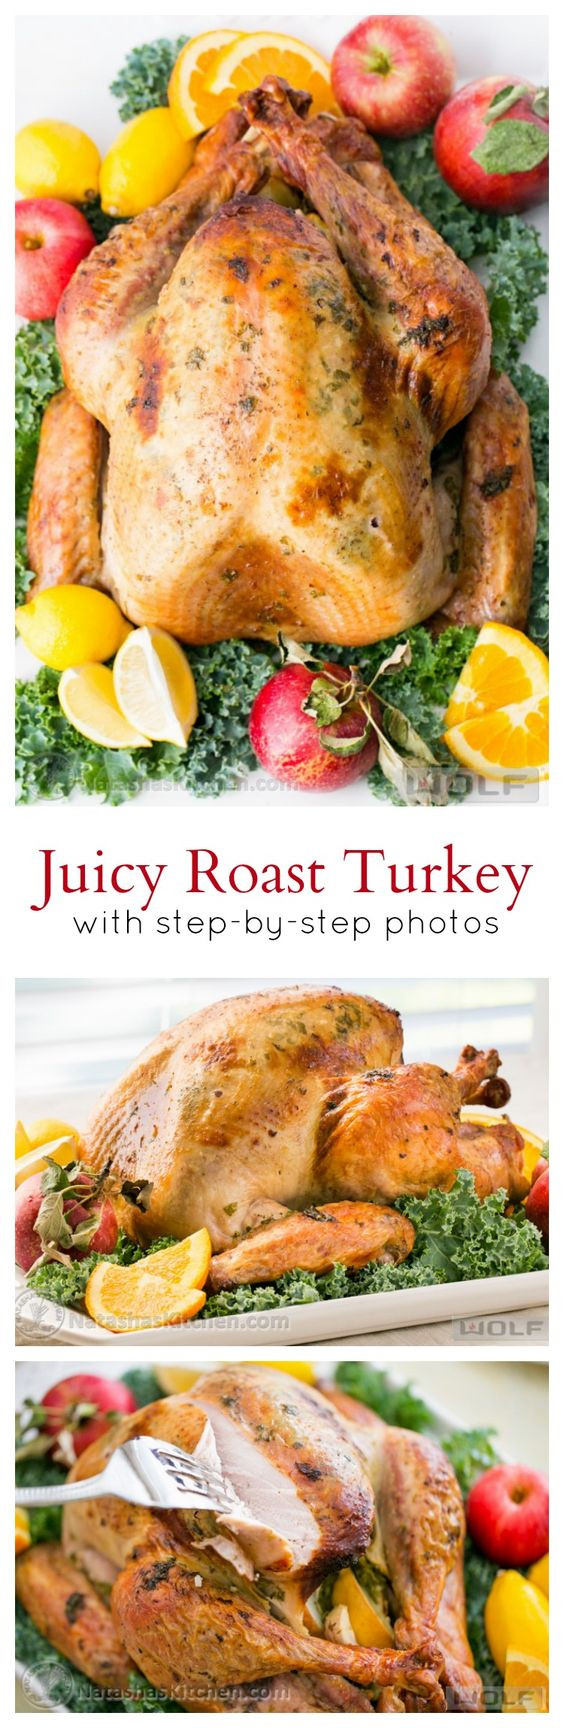 Turkey Recipes For Thanksgiving Dinner
 The BEST Thanksgiving Dinner Holiday Favorite Menu Recipes